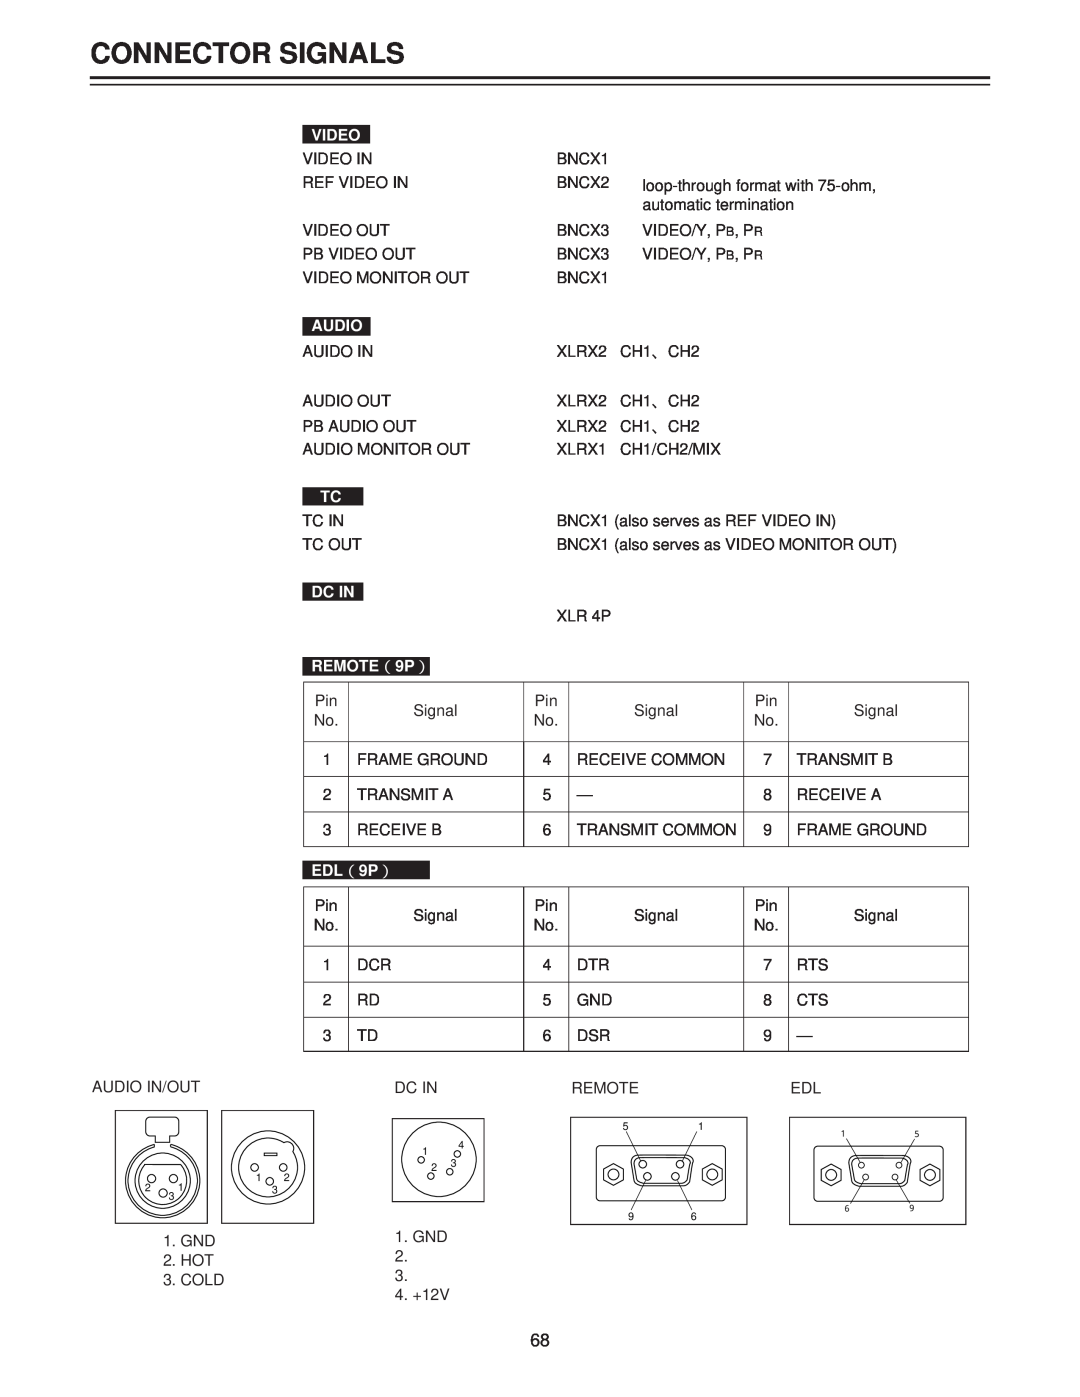 Panasonic AJ-LT85P manual Connector Signals, Video, Audio, Dc In, REMOTE（9P）, EDL（9P） 